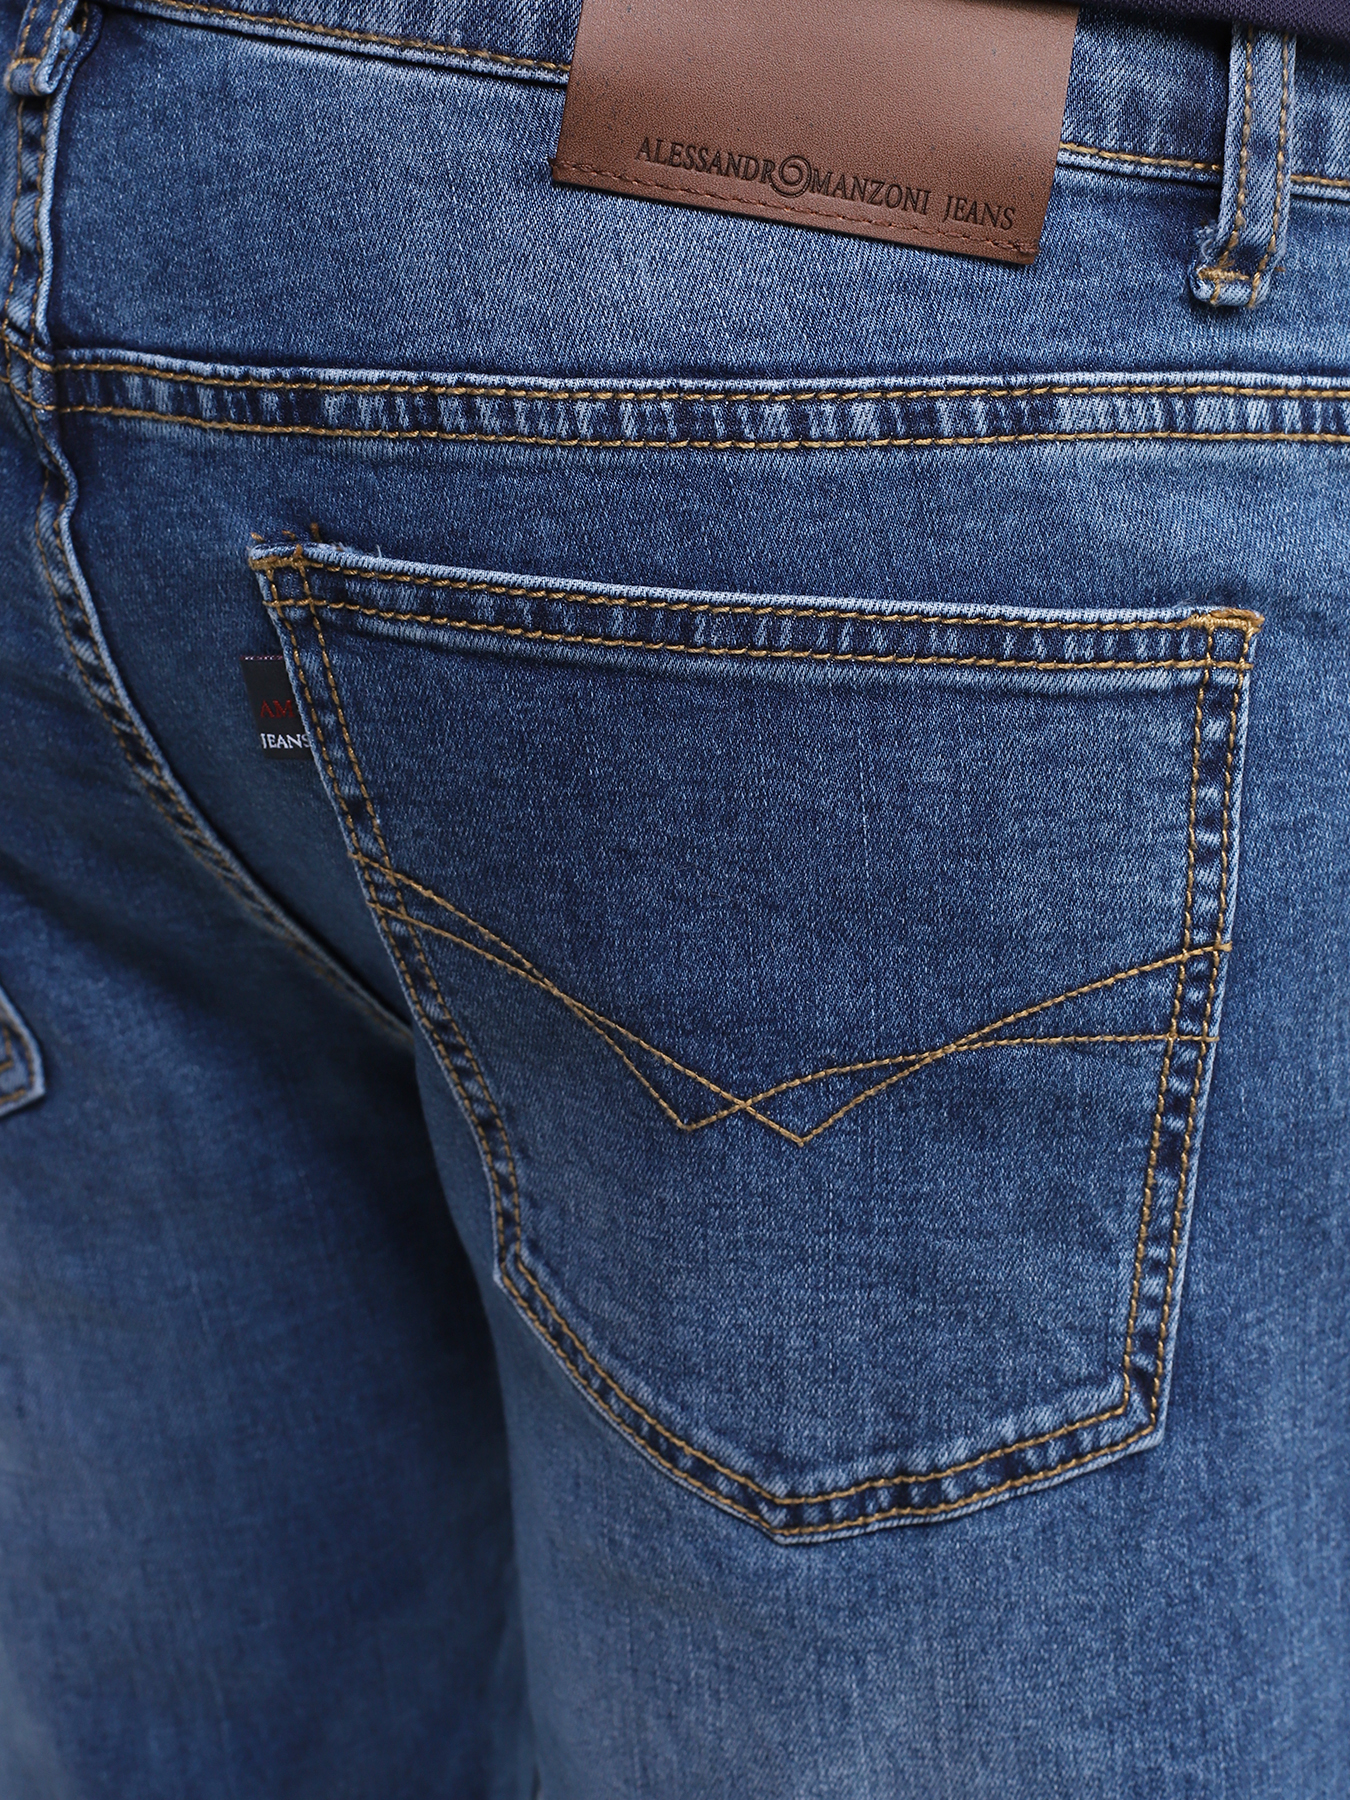 Alessandro Manzoni Jeans Прямые джинсы 355744-026 Фото 4